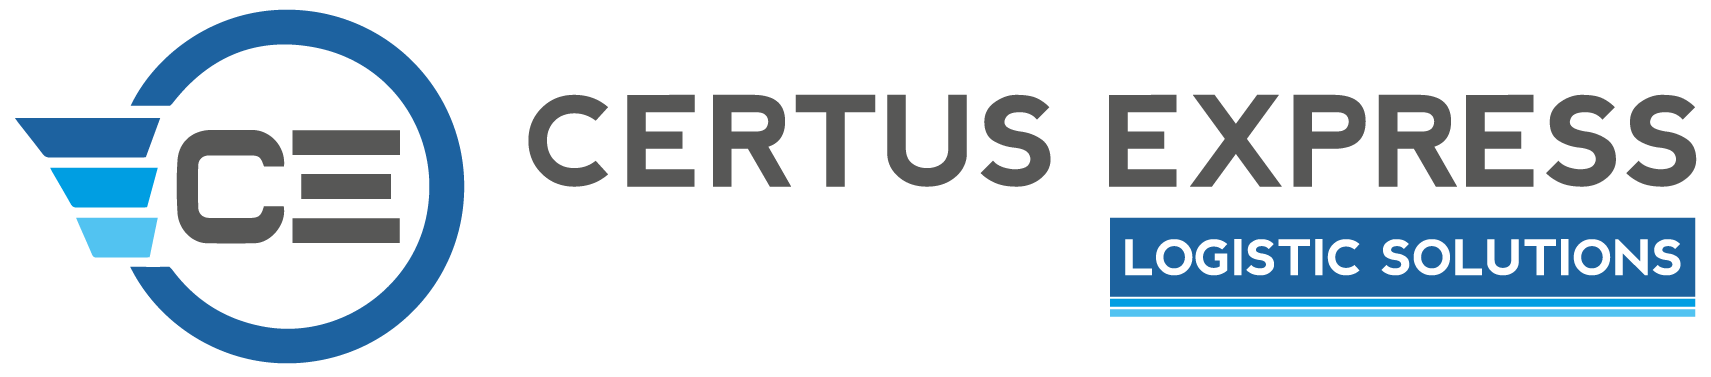 Certus Express | Logistic Solutions